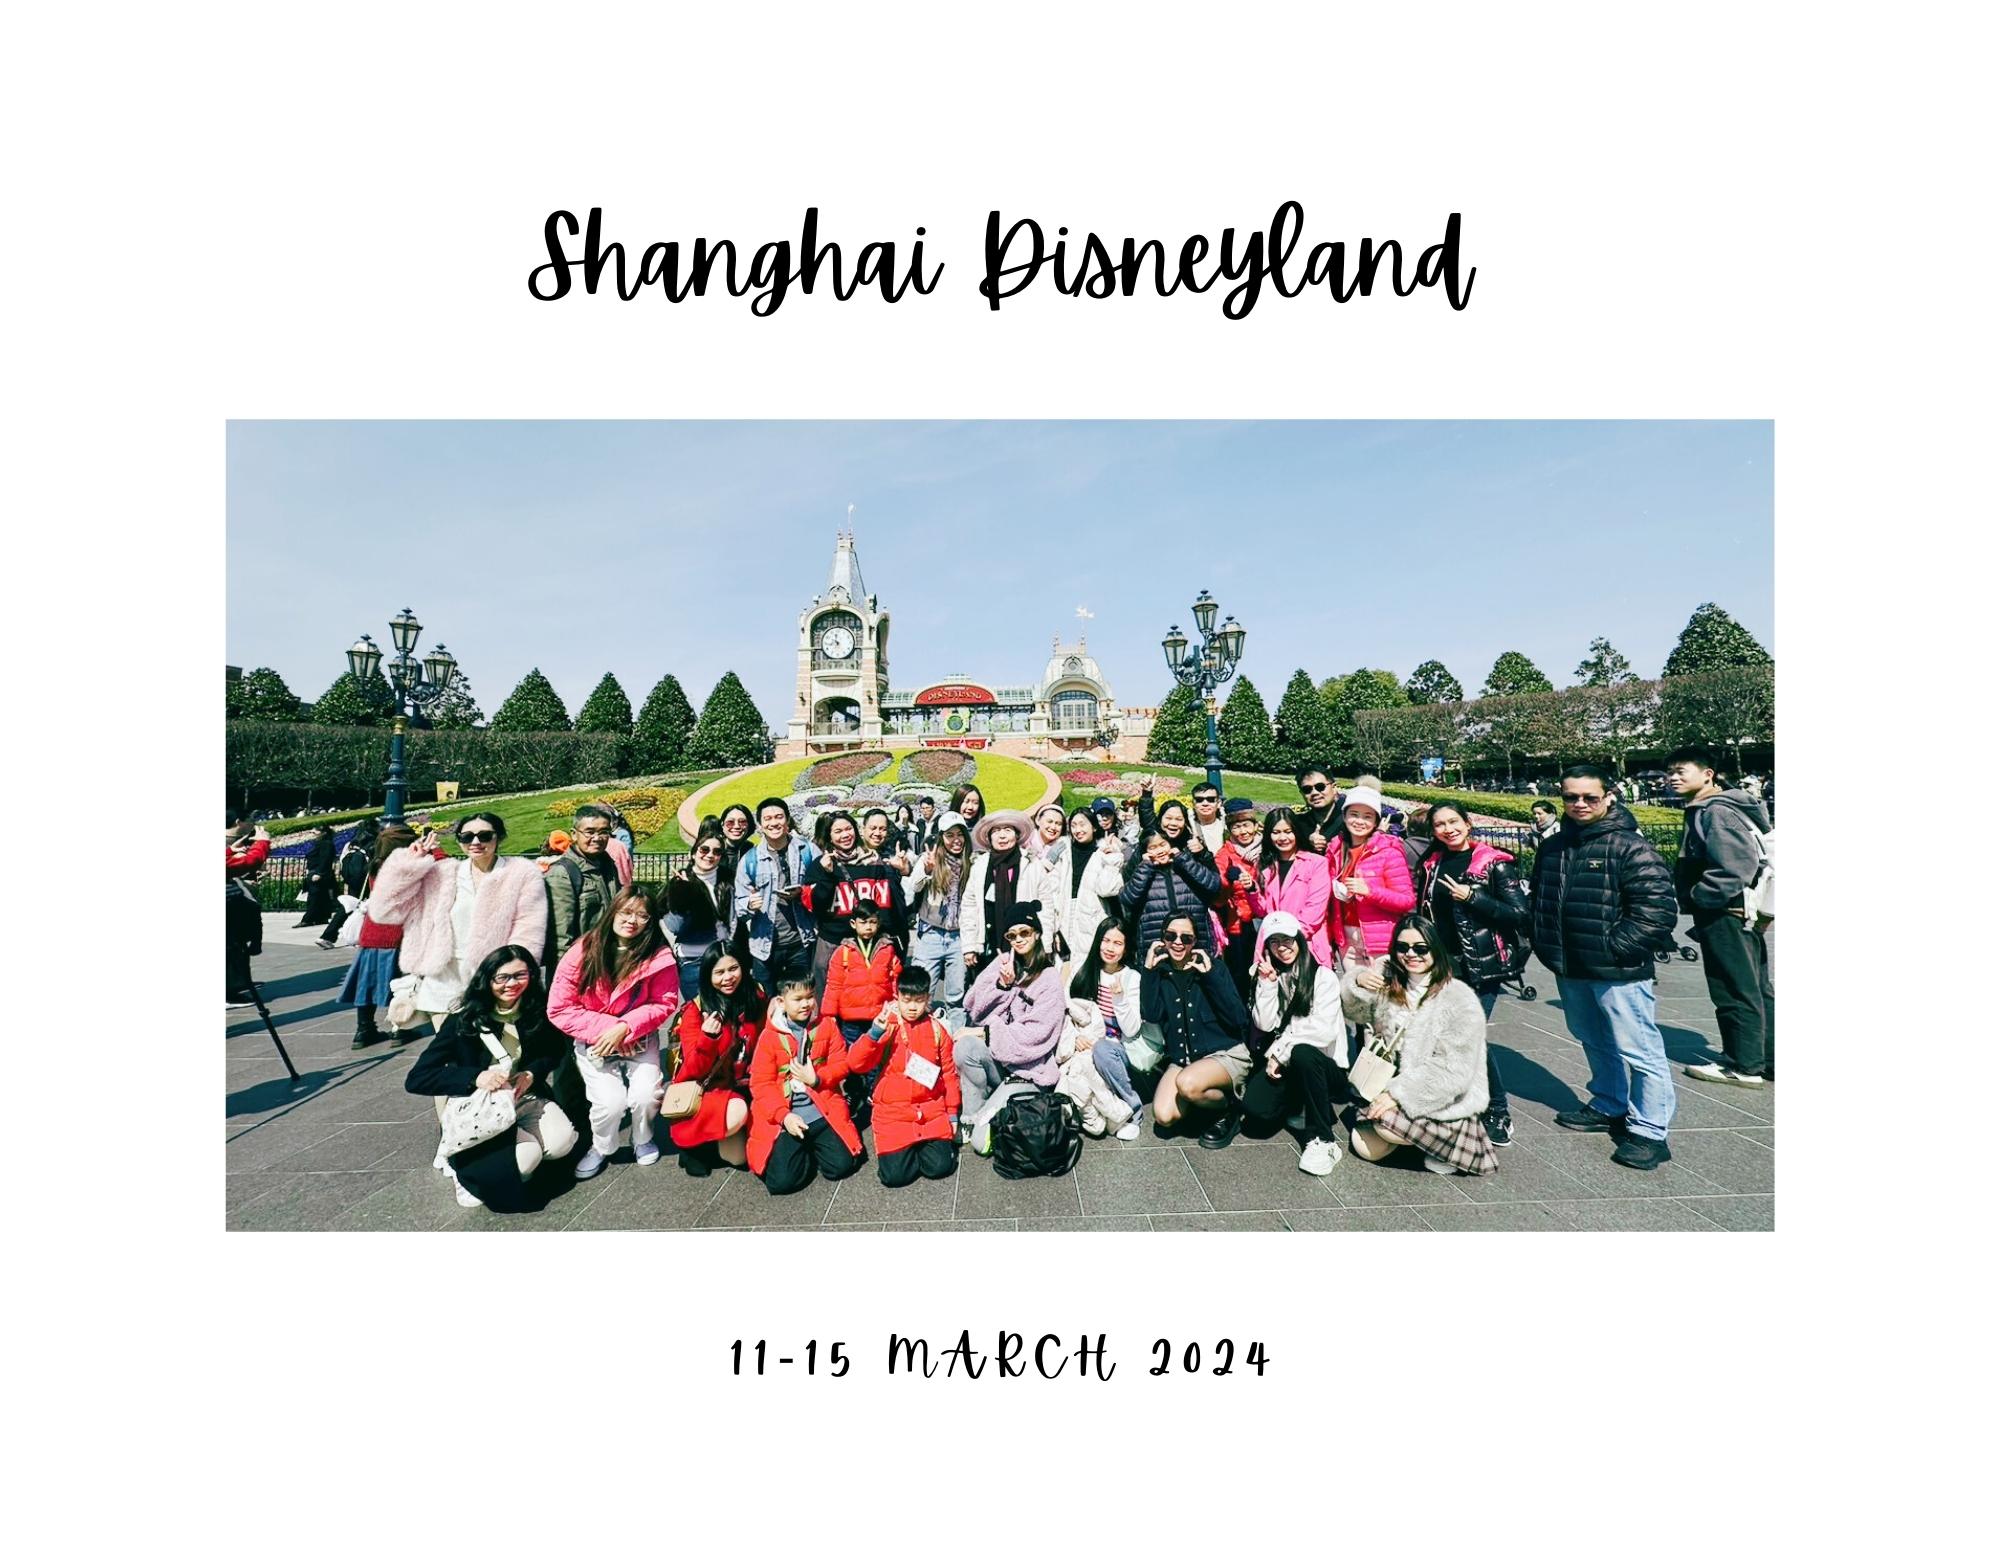 tour-shanghai-disneyland-tman-freebirdtravelandtour